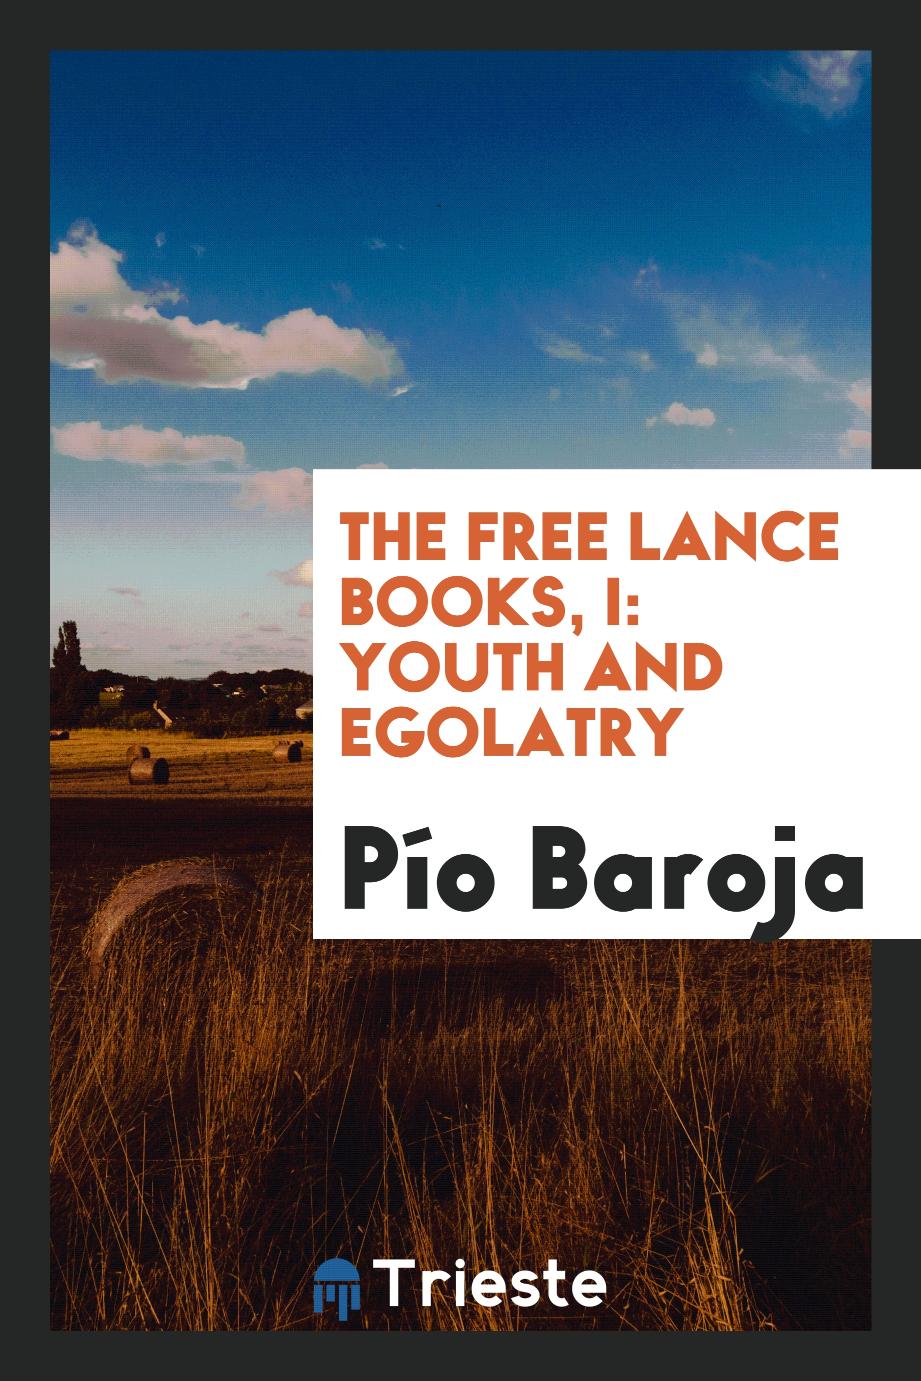 The free lance books, I: Youth and egolatry